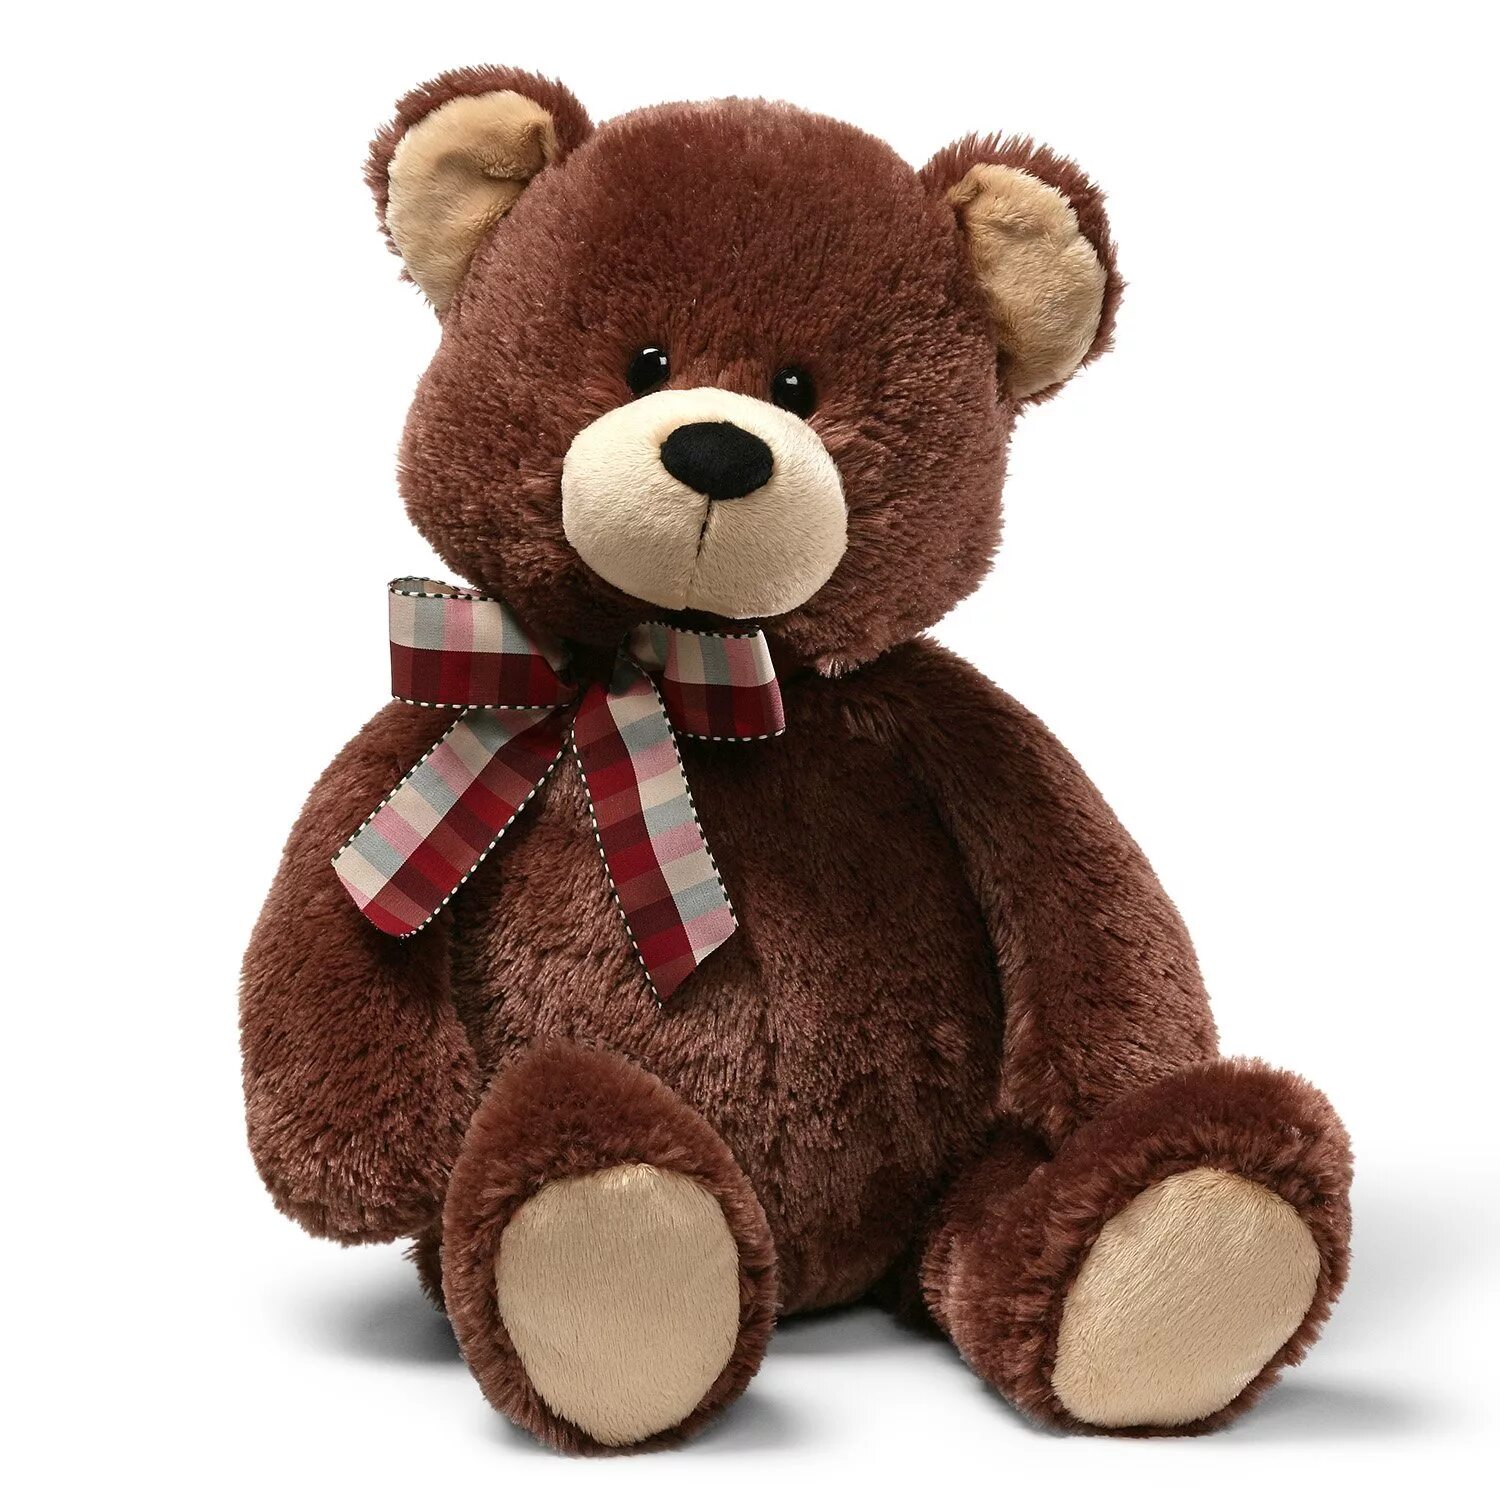 A brown teddy bear. Тедди Беар игрушка. Мишка Тедди Беар коричневый. Плюшевый мишка коричневый. Игрушка медведь плюшевый коричневый.